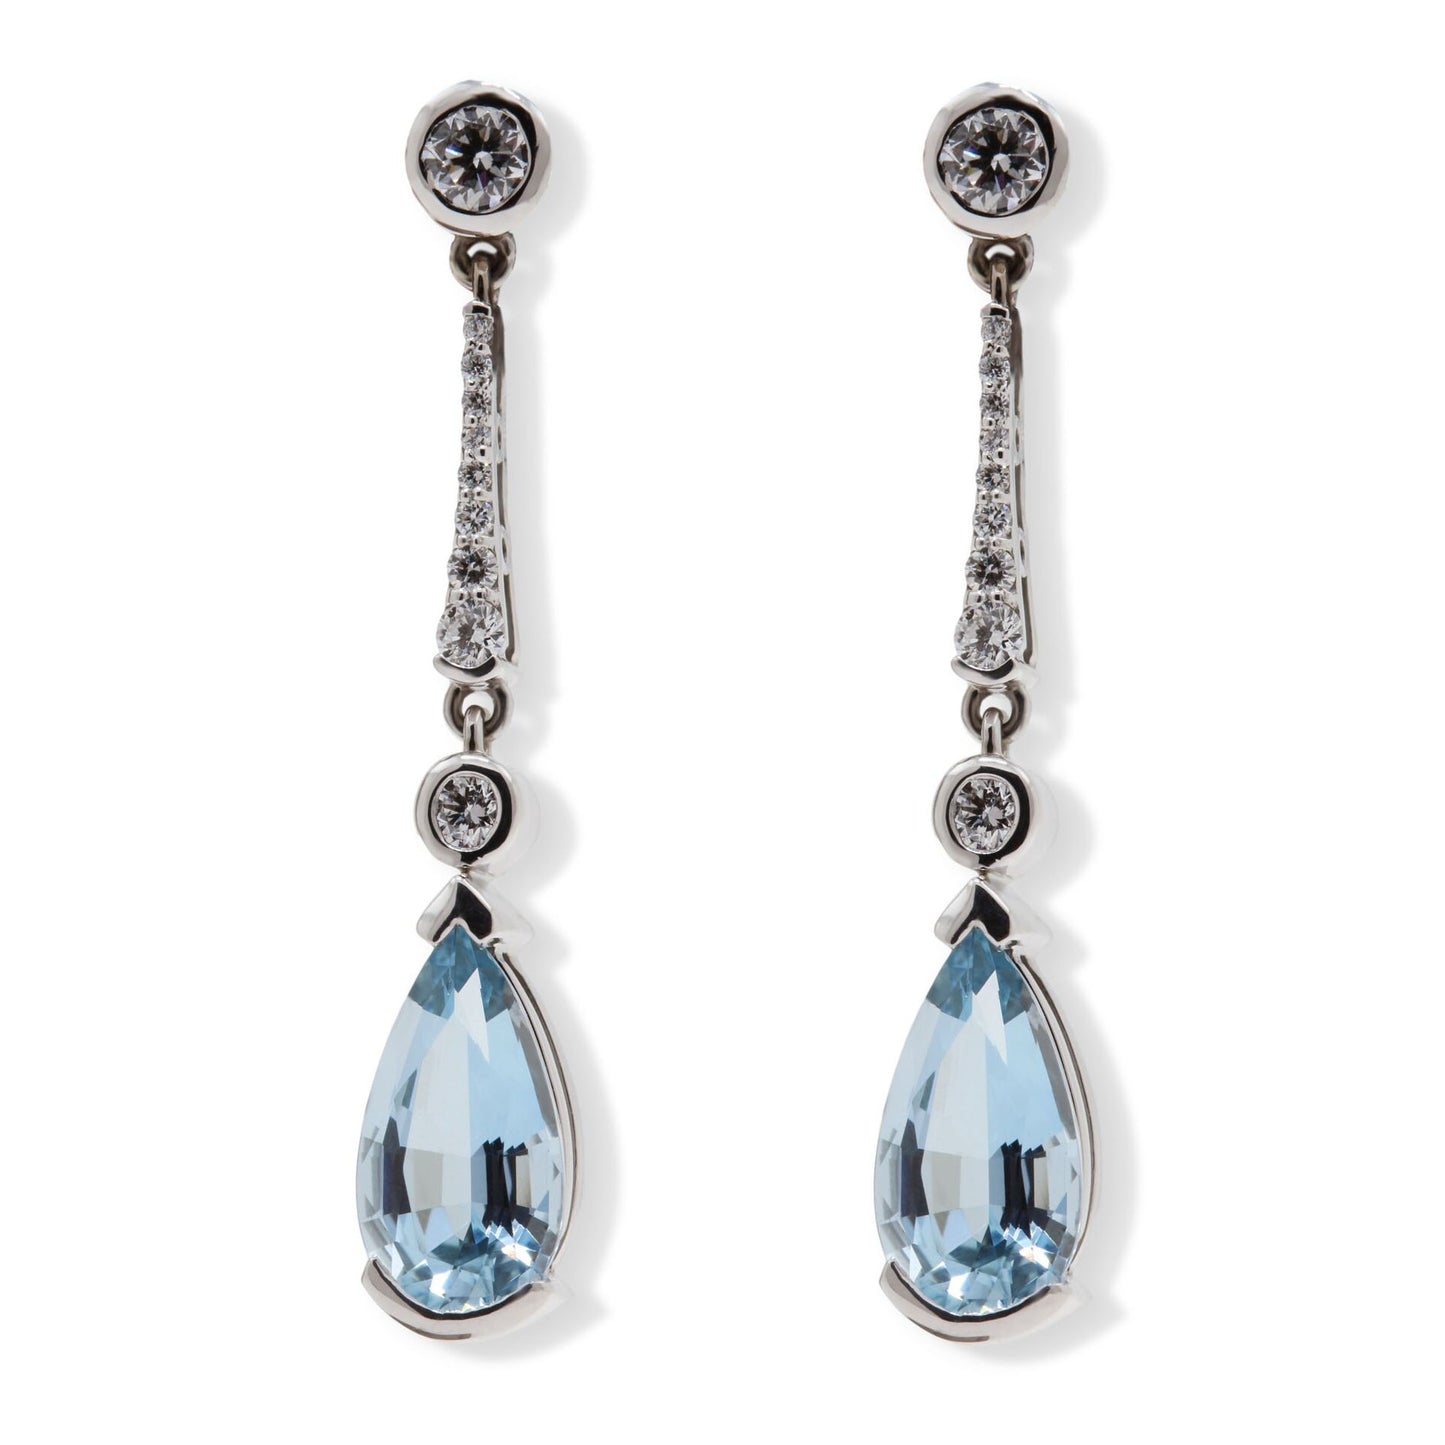 18ct white gold brilliant cut diamond and faceted pear cut aquamarine drop earrings.